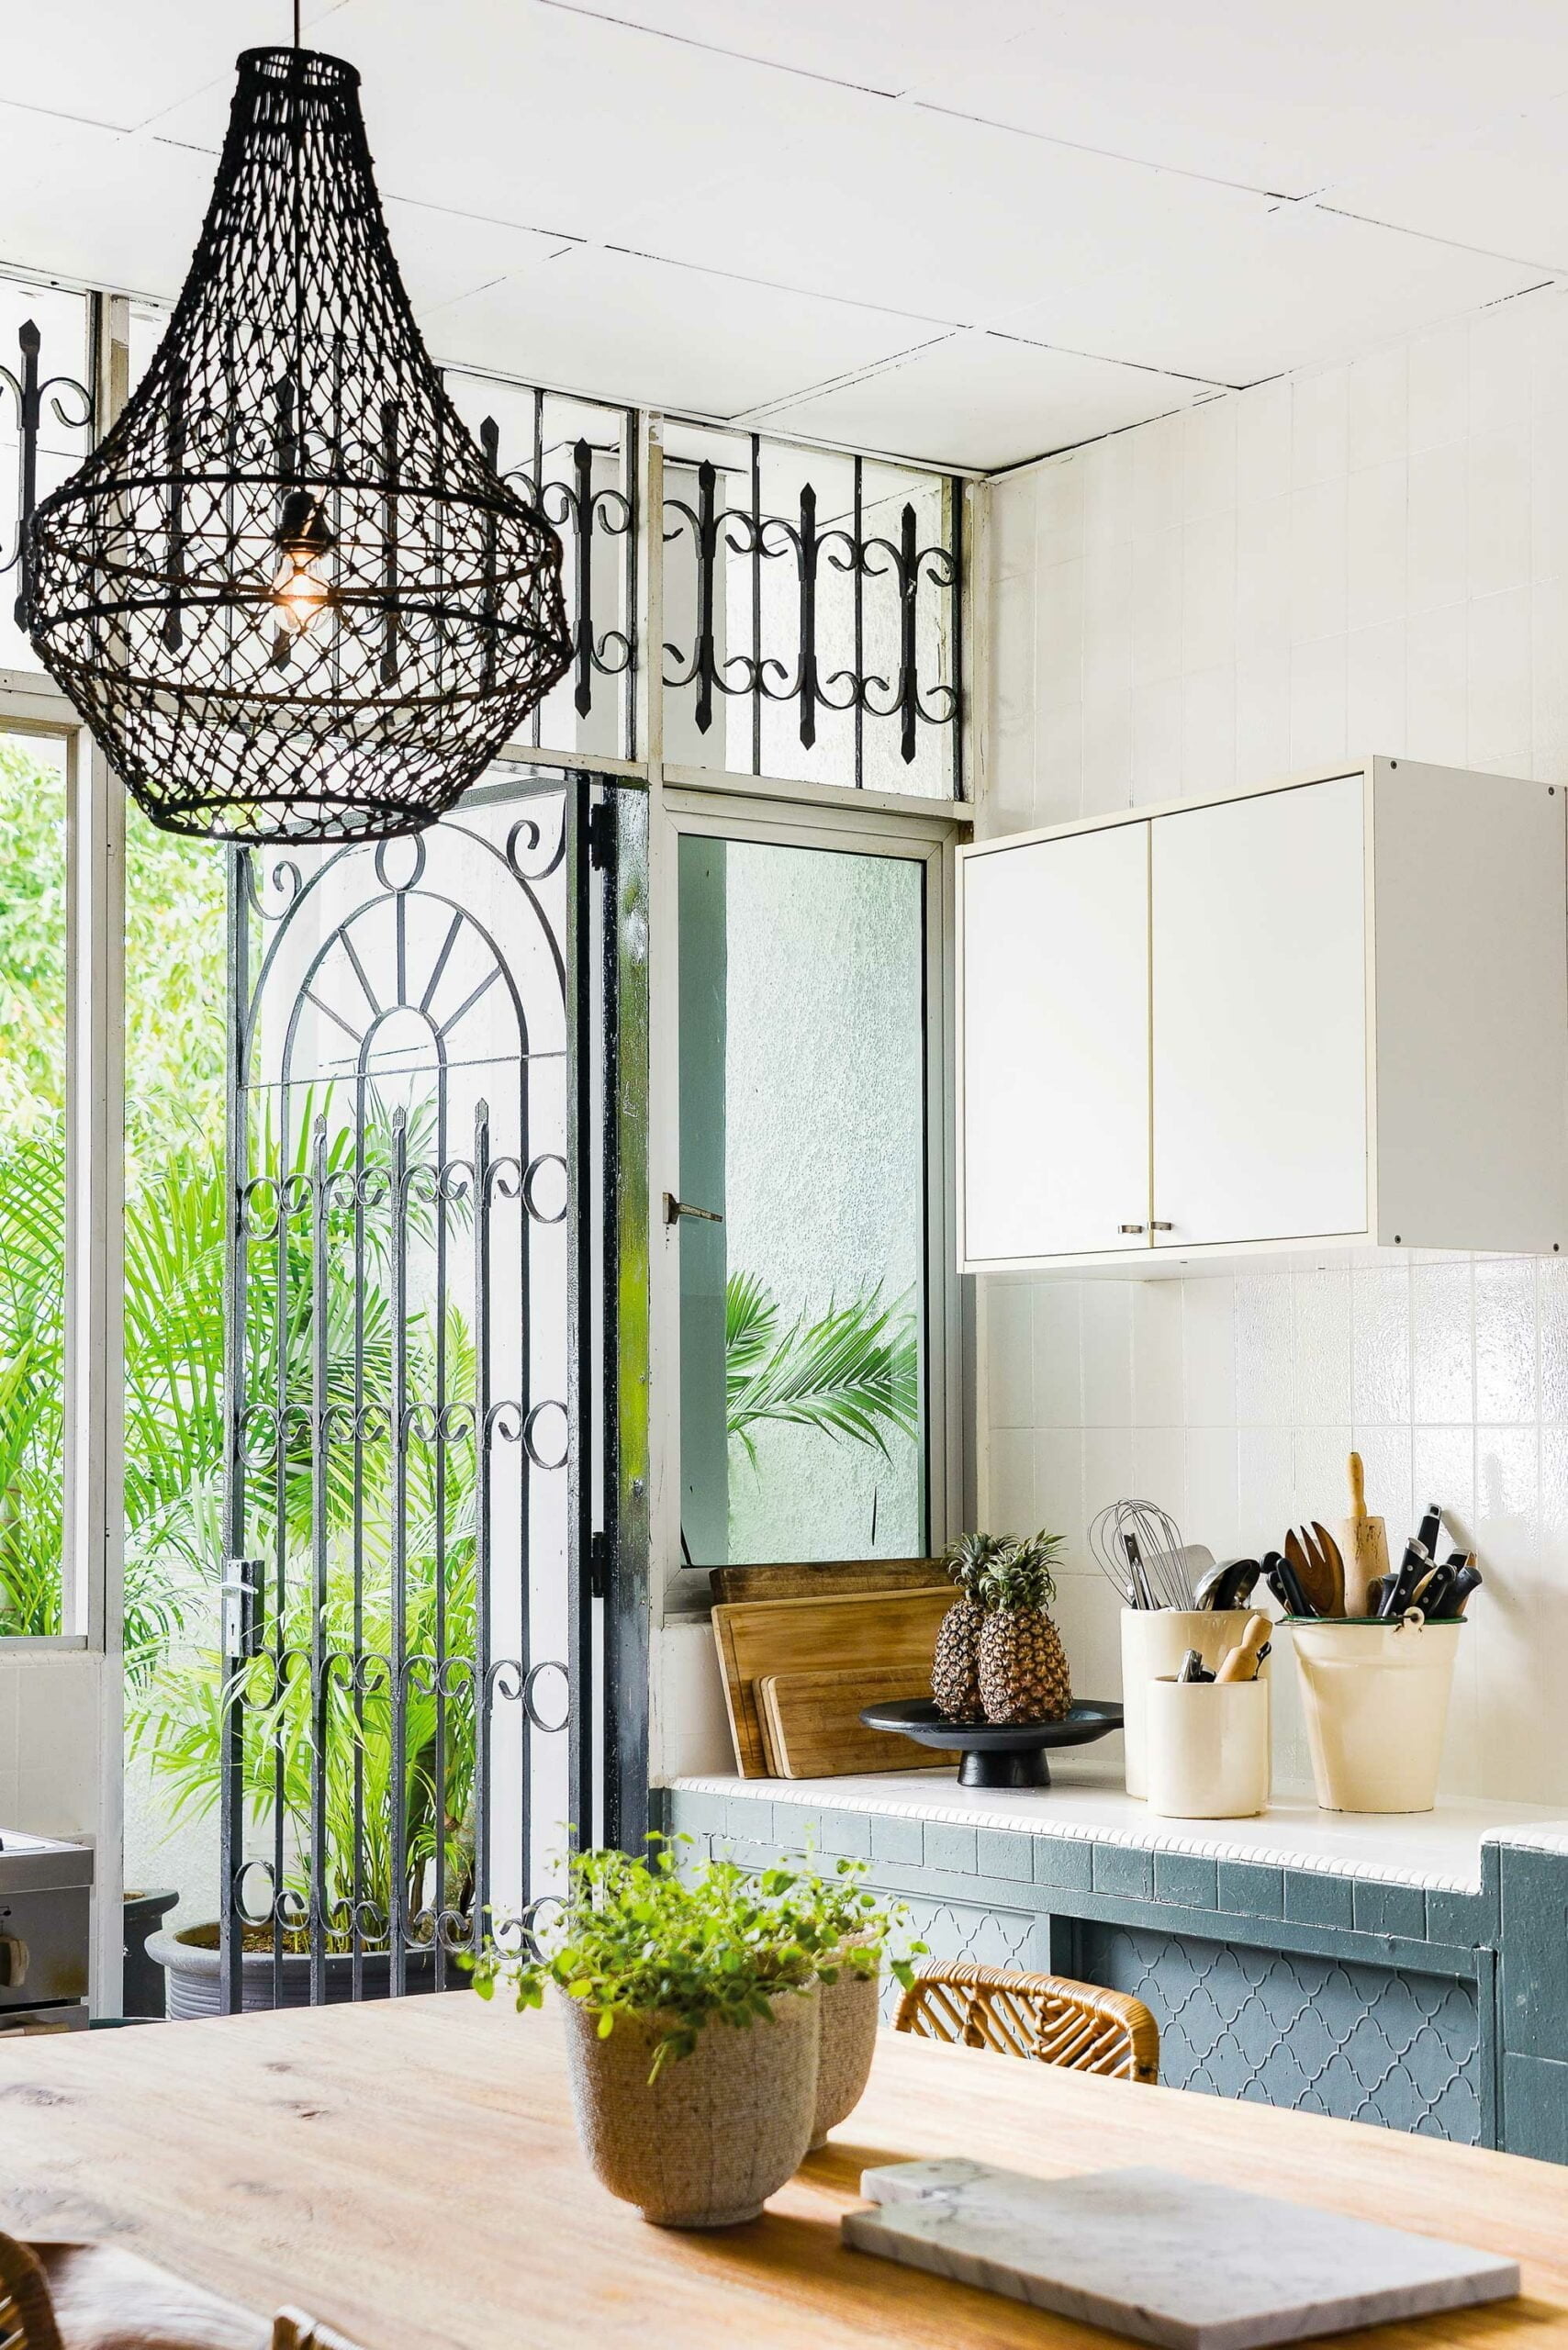 Kitchen design, natural ventilation